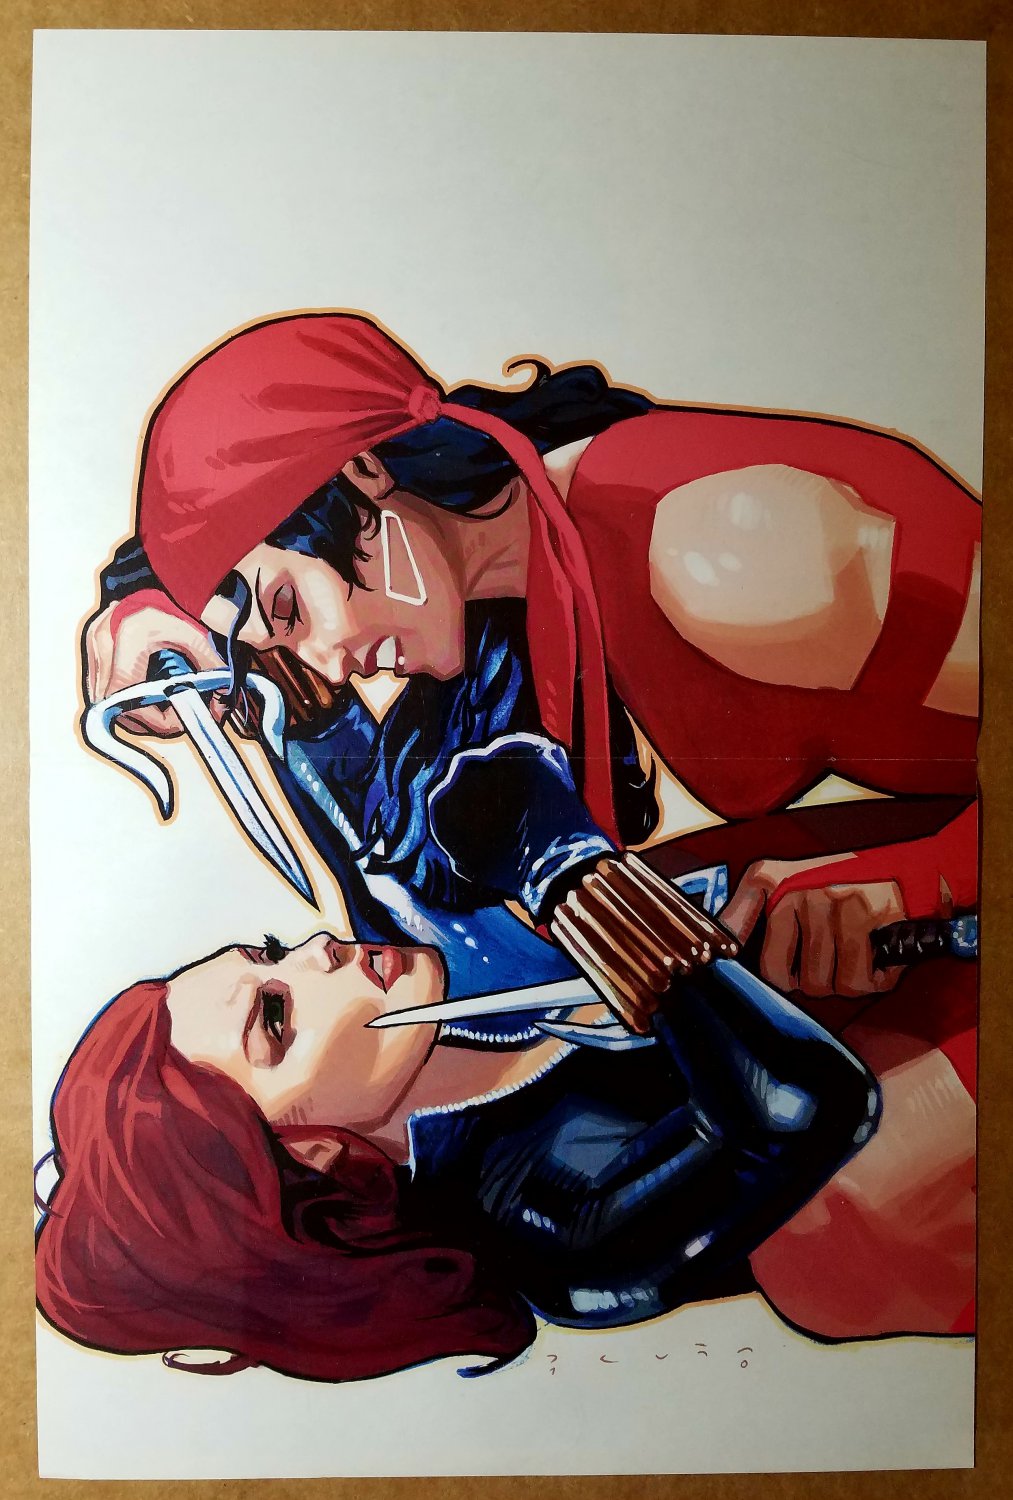 Avengers Black Widow vs Elektra Marvel Comics Poster by Daniel Acuna.